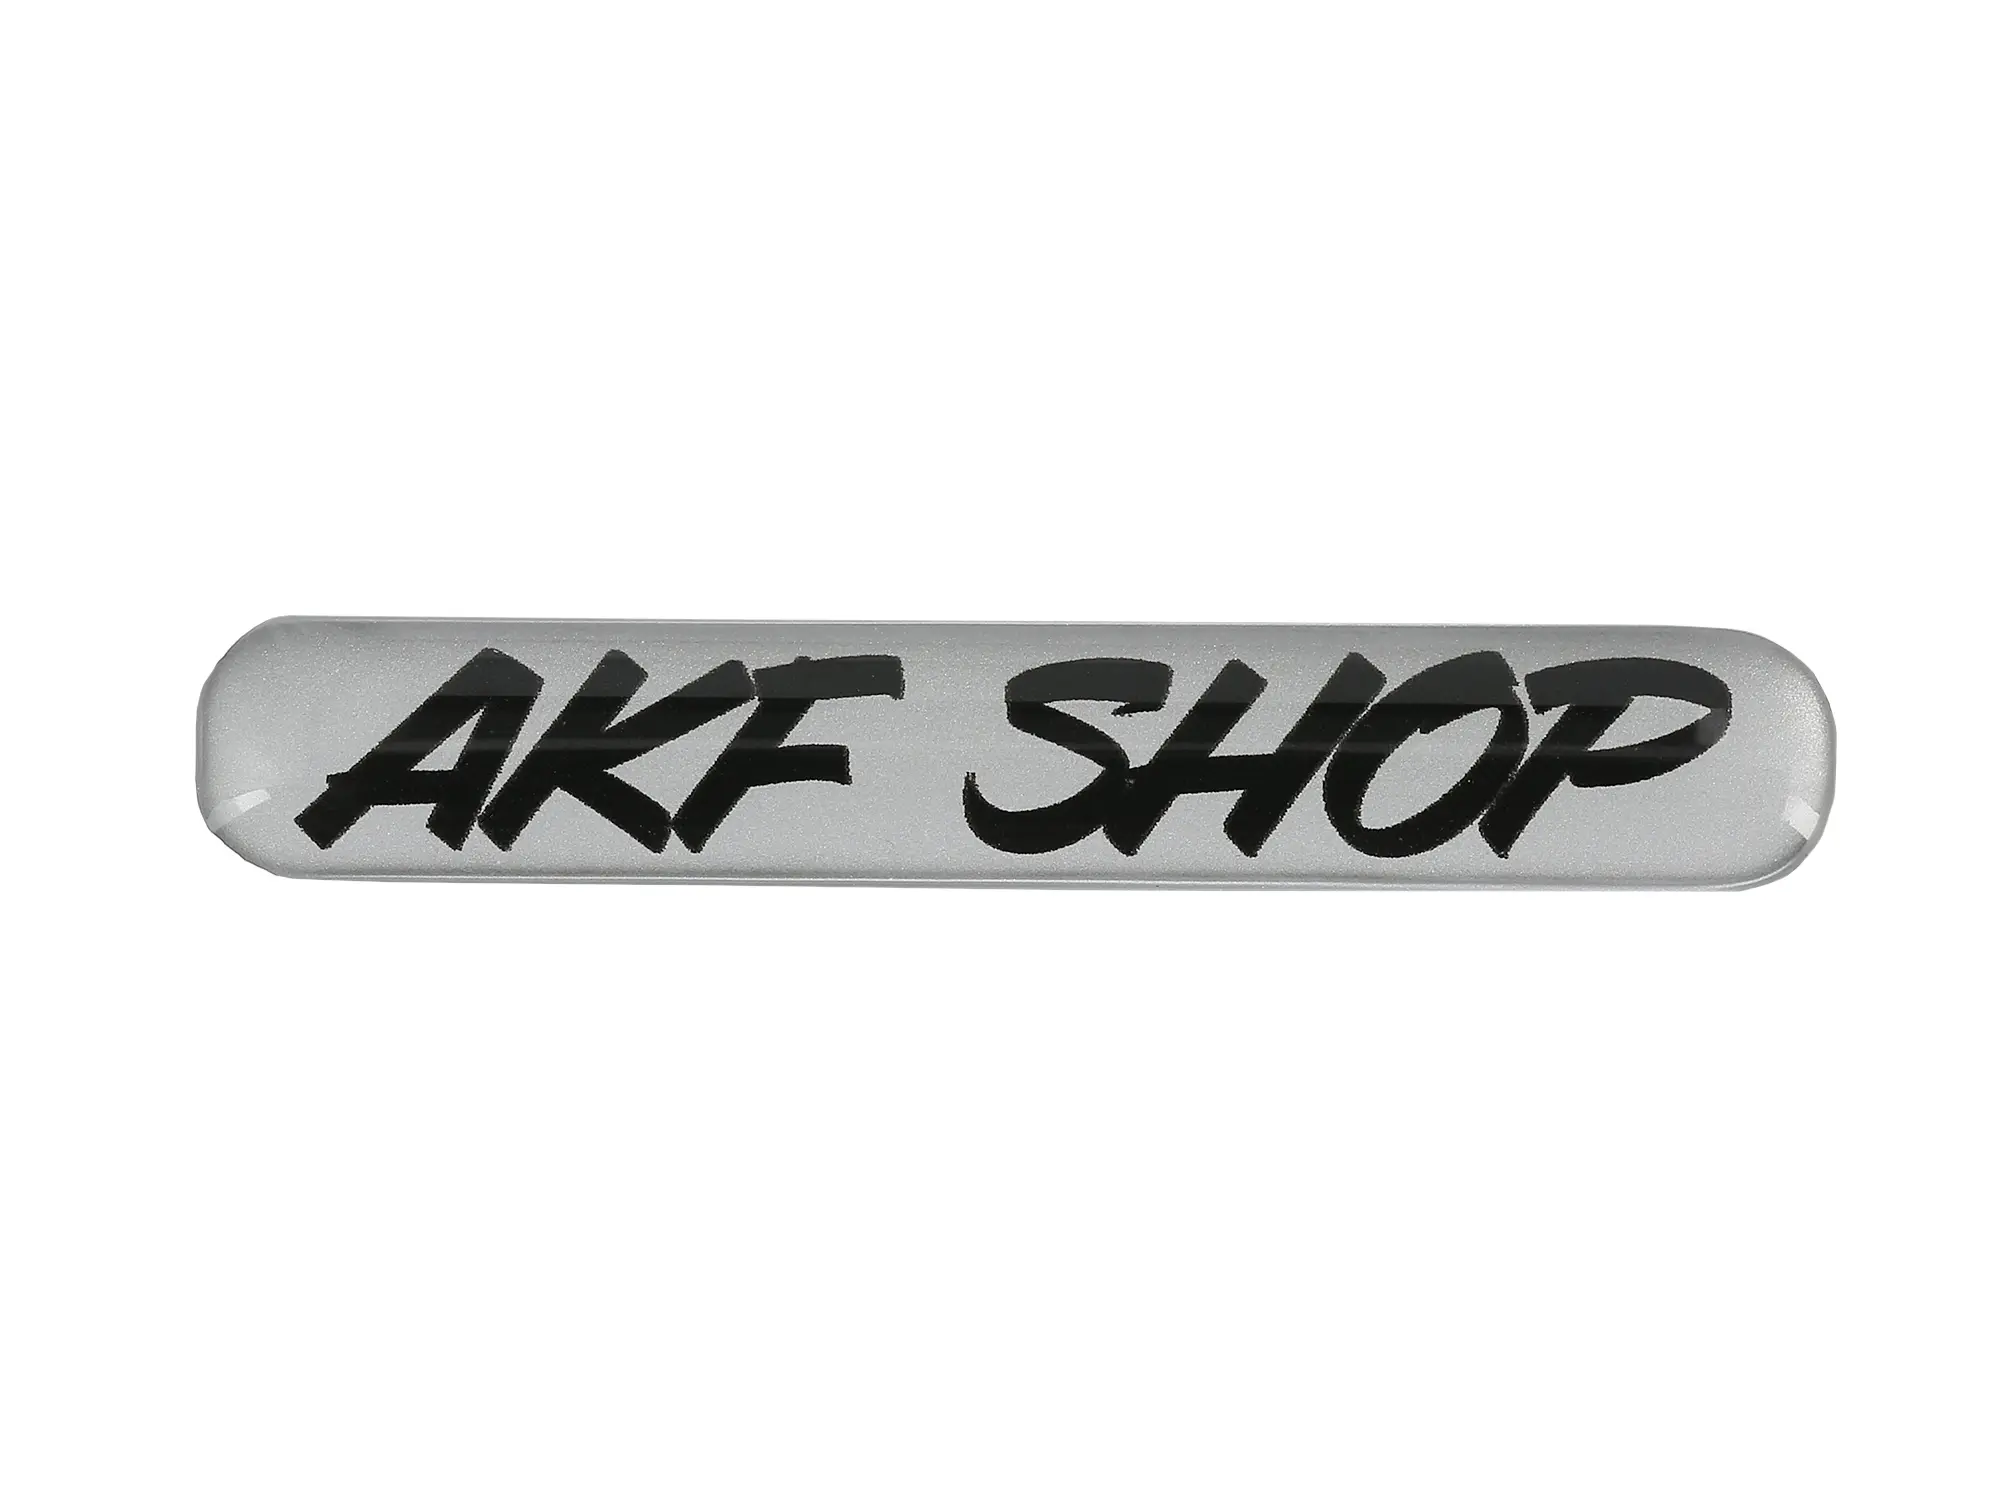 Gelaufkleber - "AKF Shop" silber/schwarz, Art.-Nr.: 10070617 - Bild 1